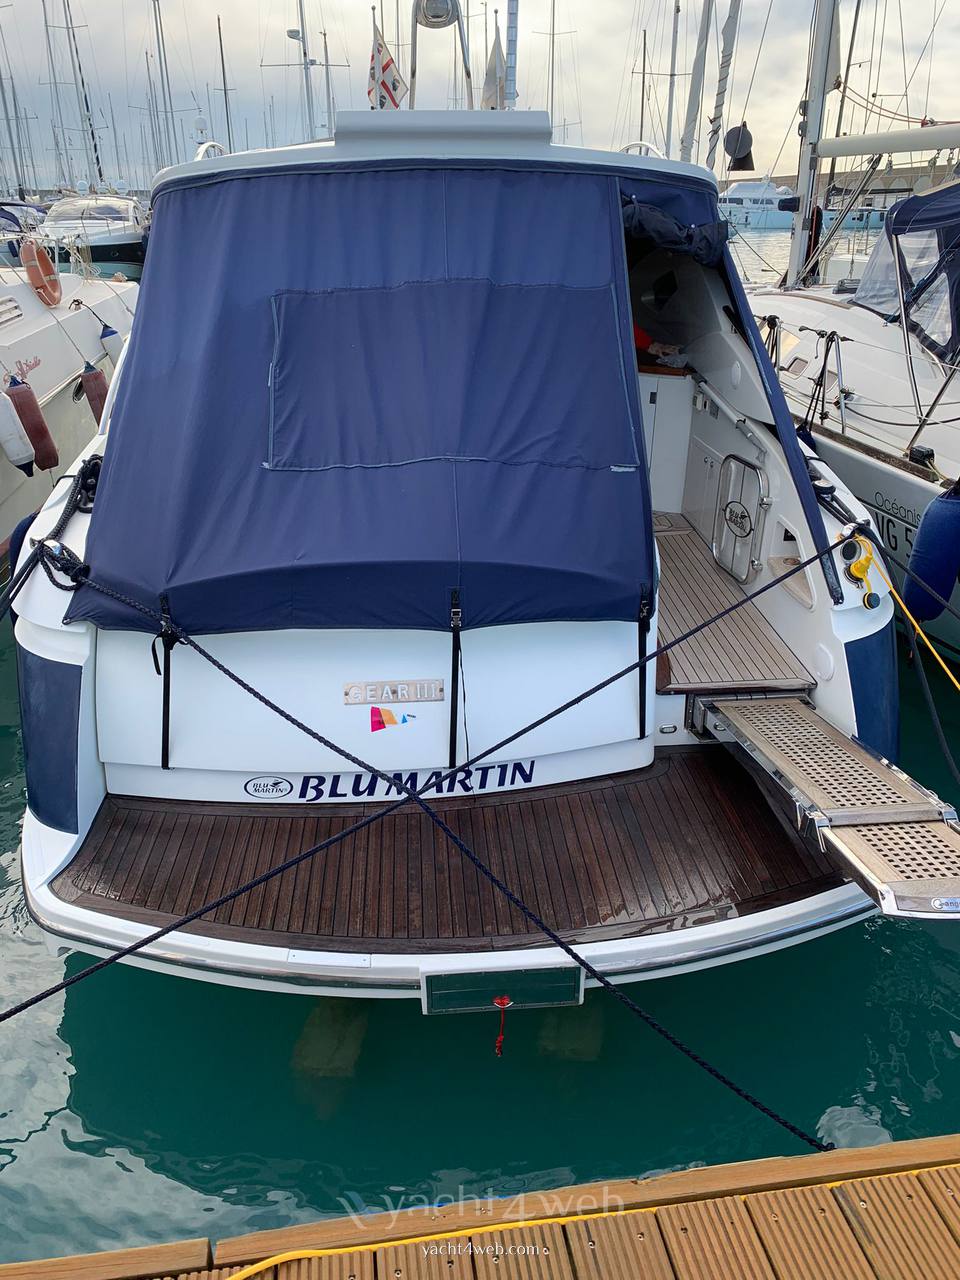 BLU MARTIN 13,50 sun top ht قارب بمحرك مستعملة للبيع